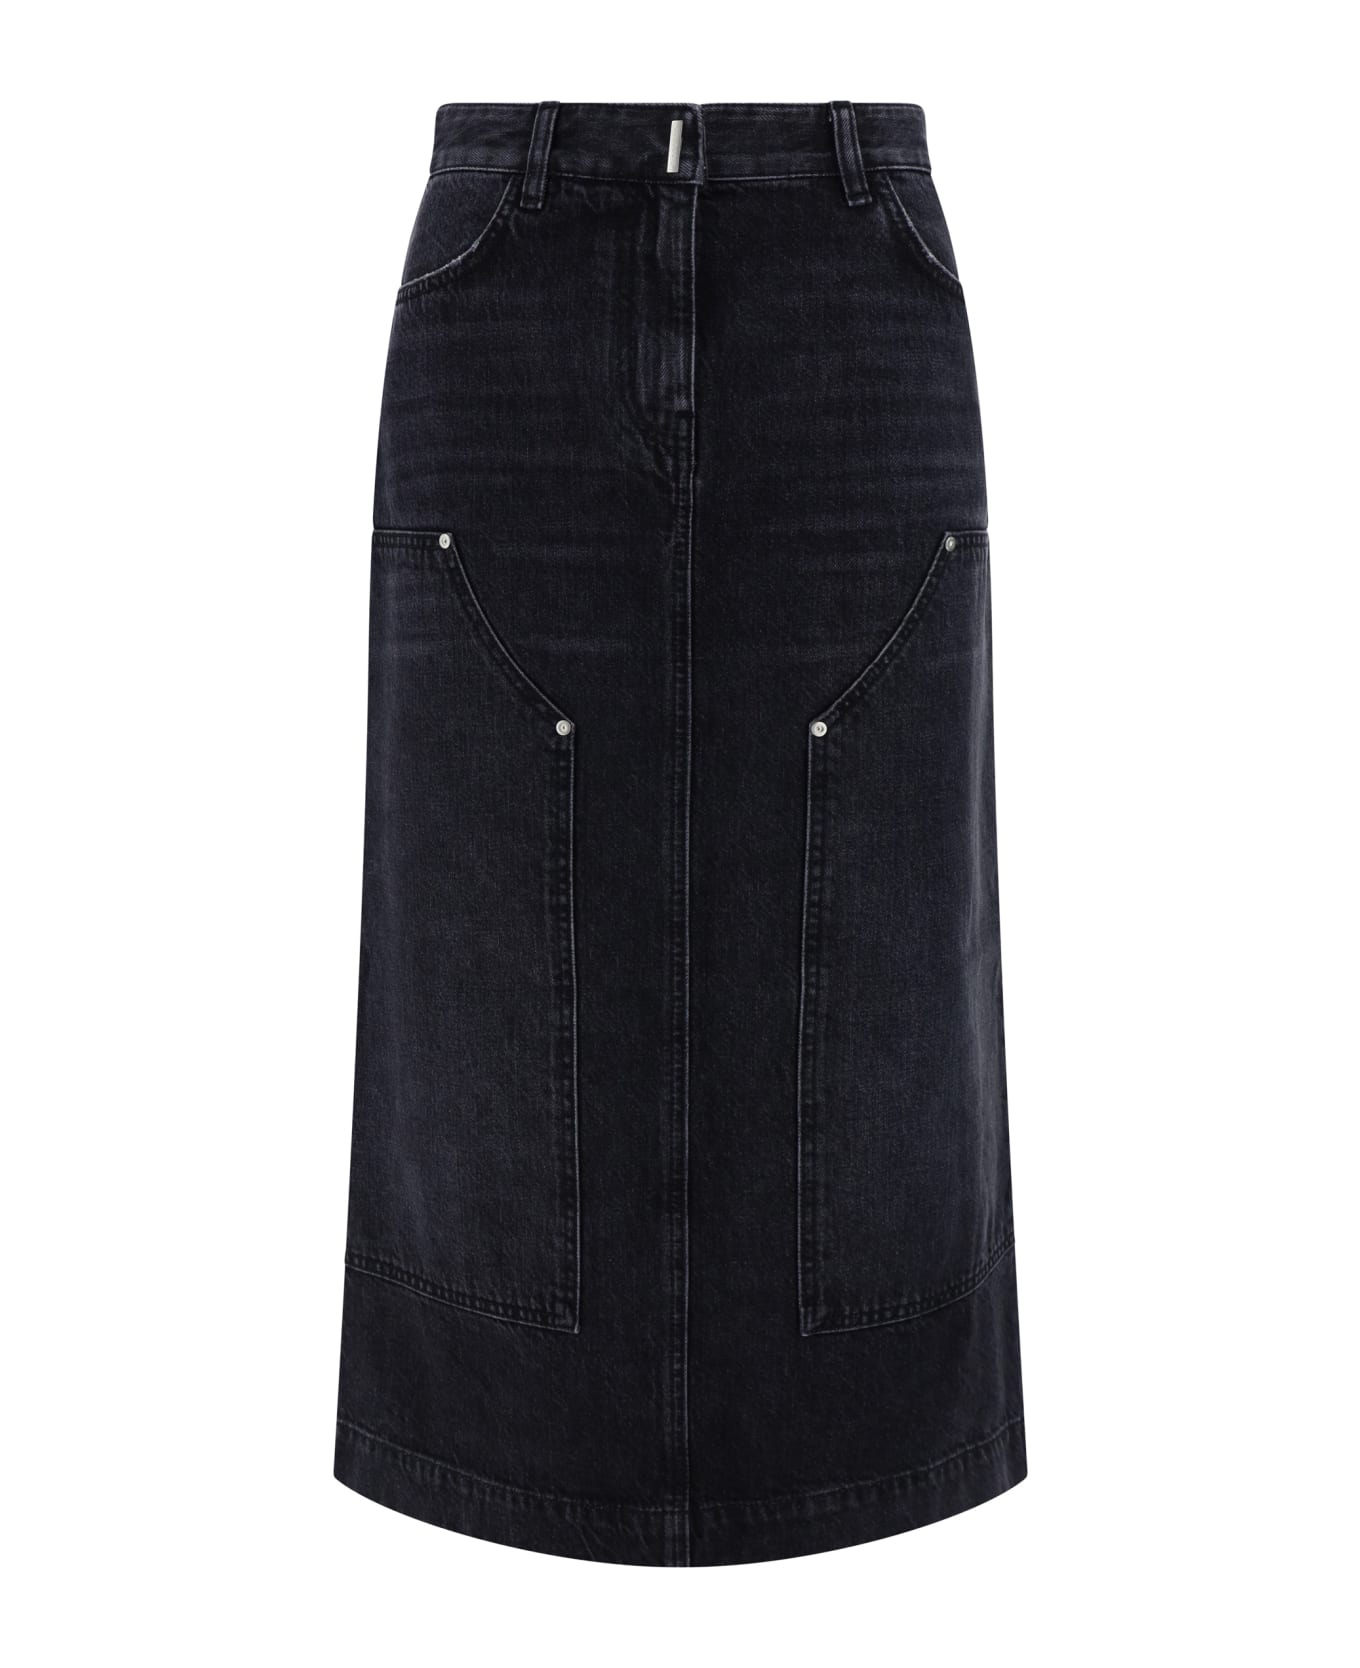 Givenchy Denim Skirt - Faded Black スカート